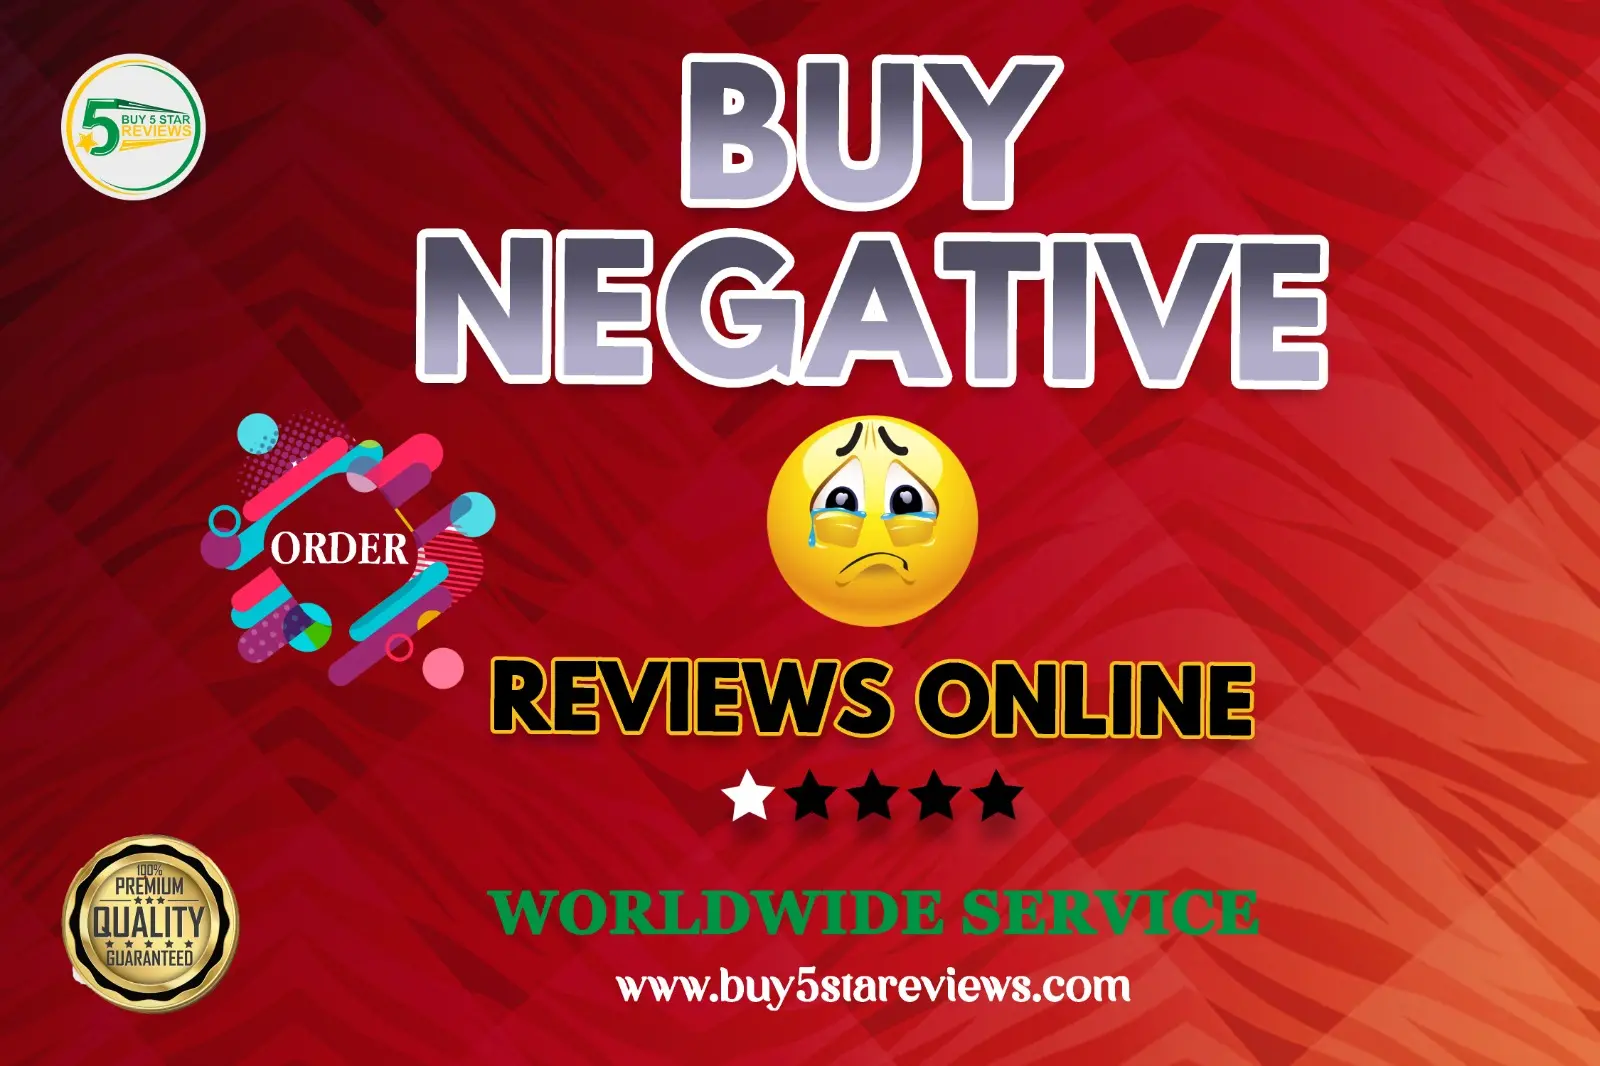 Buy Negative Reviews online